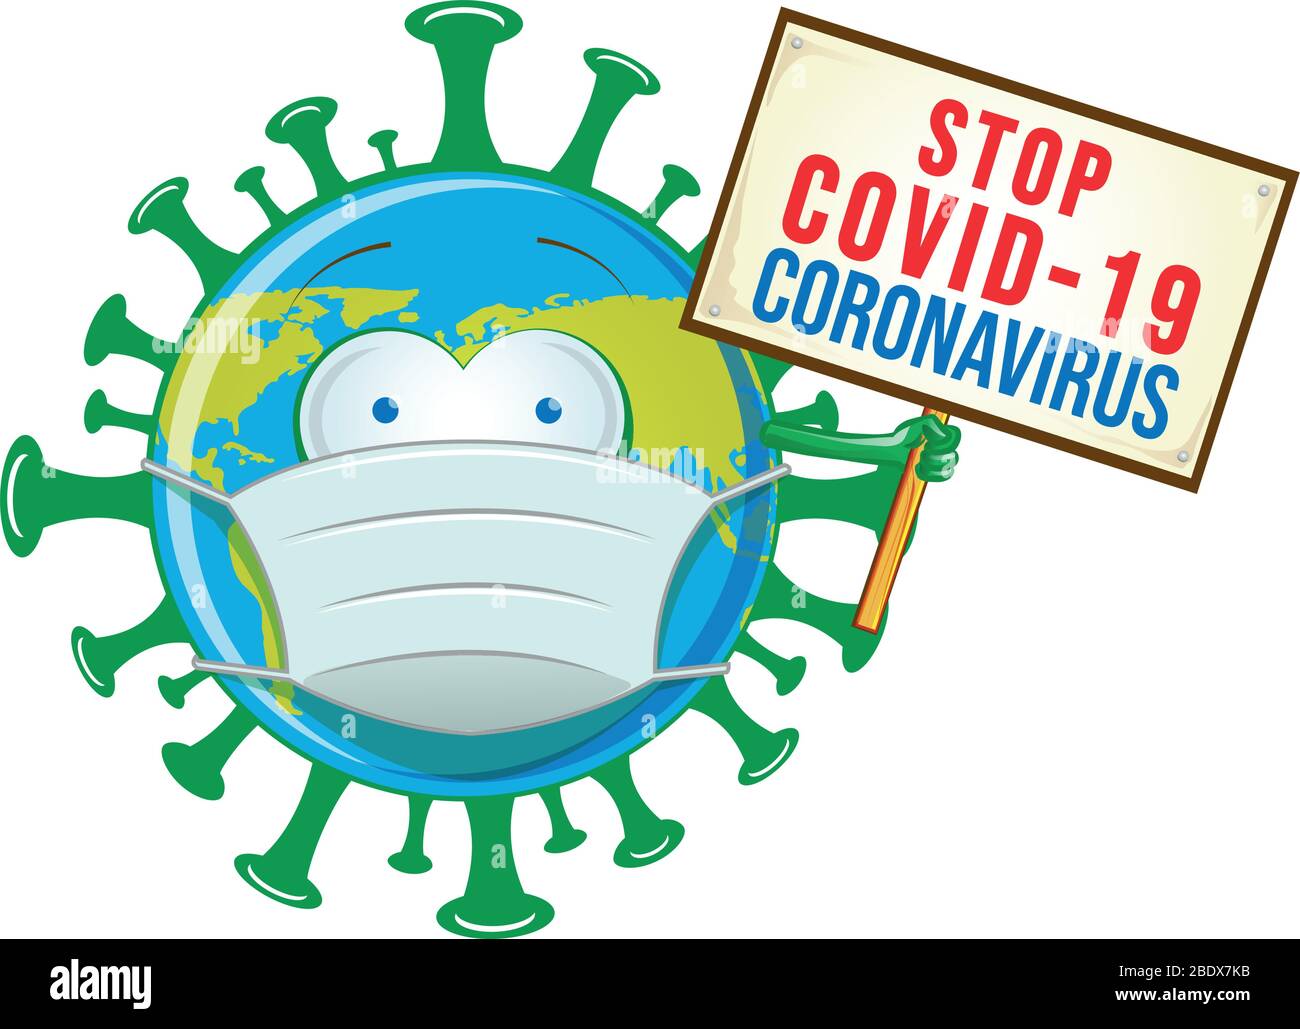 stop evil coronavirus character cartoon with signboard Stock Vector